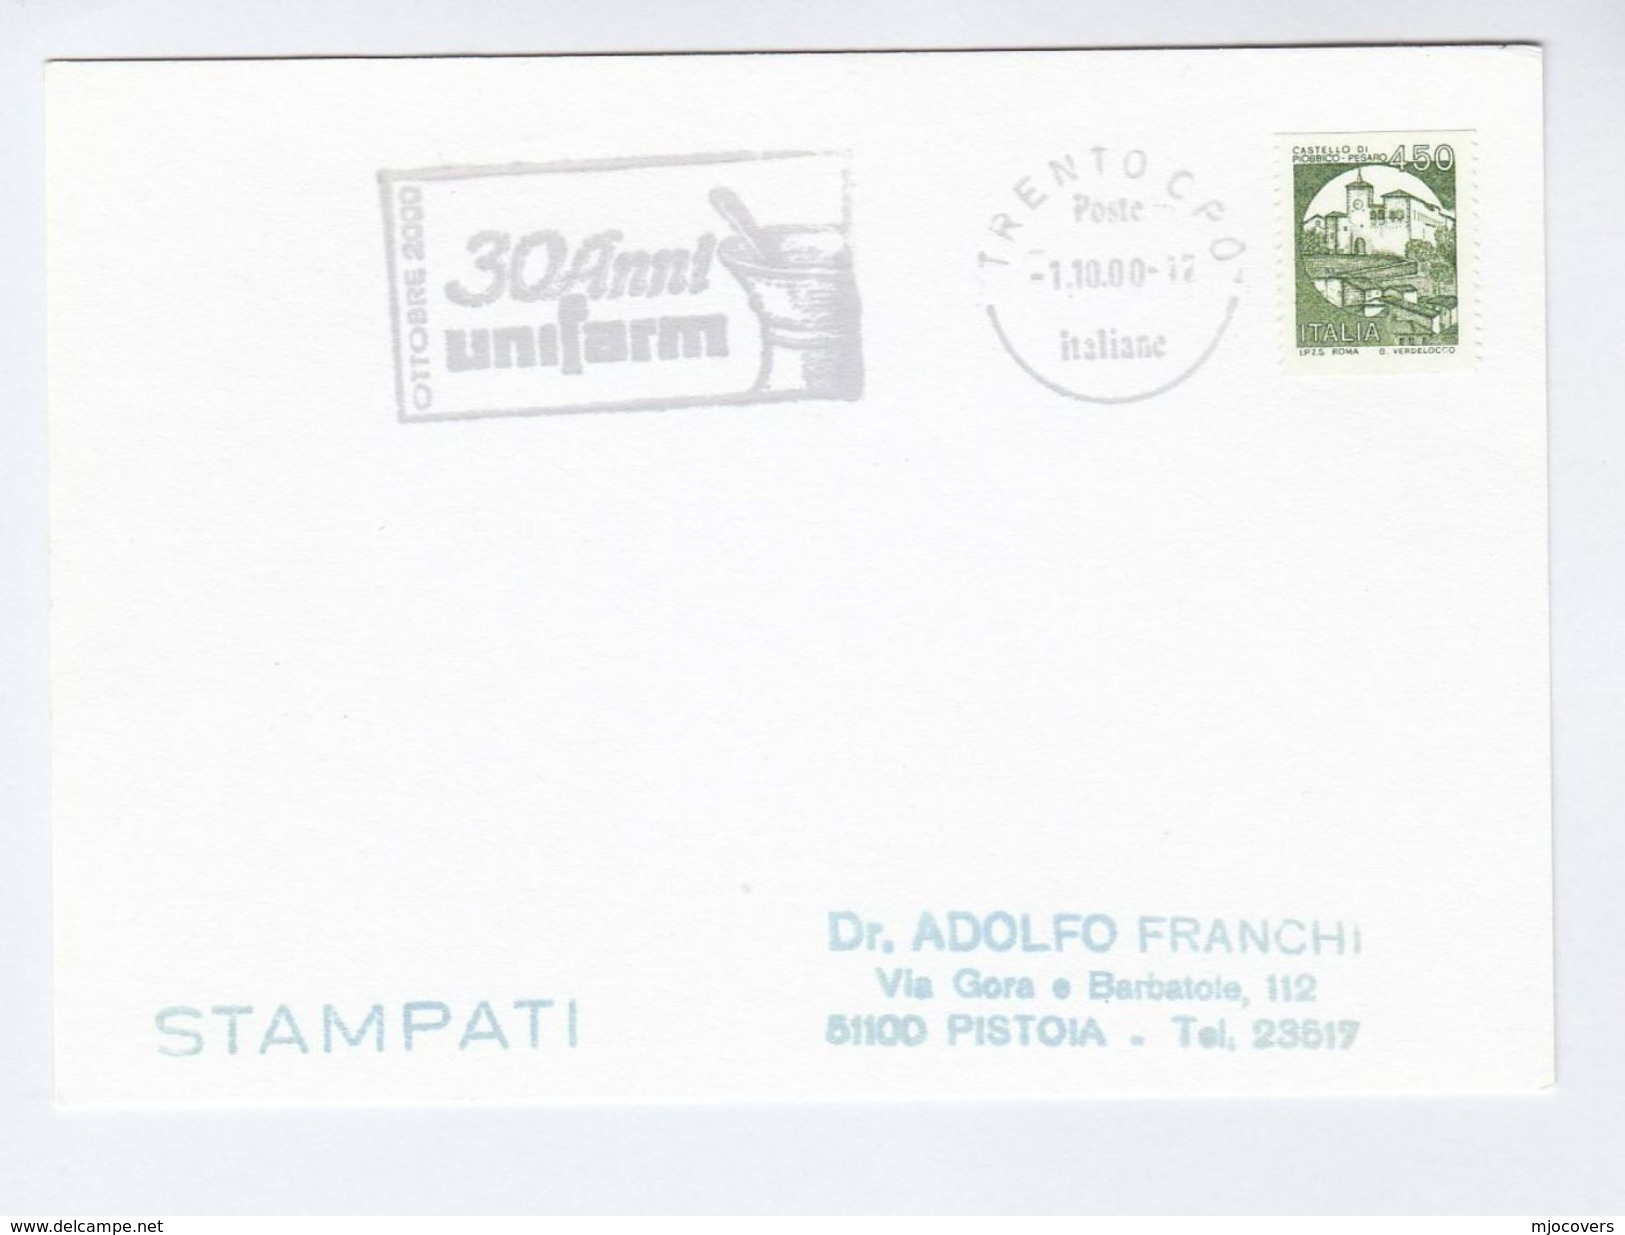 2000 Trento ITALY PHARMACY EVENT COVER  SLOGAN Illus MORTAR PESTLE, UNIFARM 30th ANNIV Medicine Health Stamps - Pharmacie